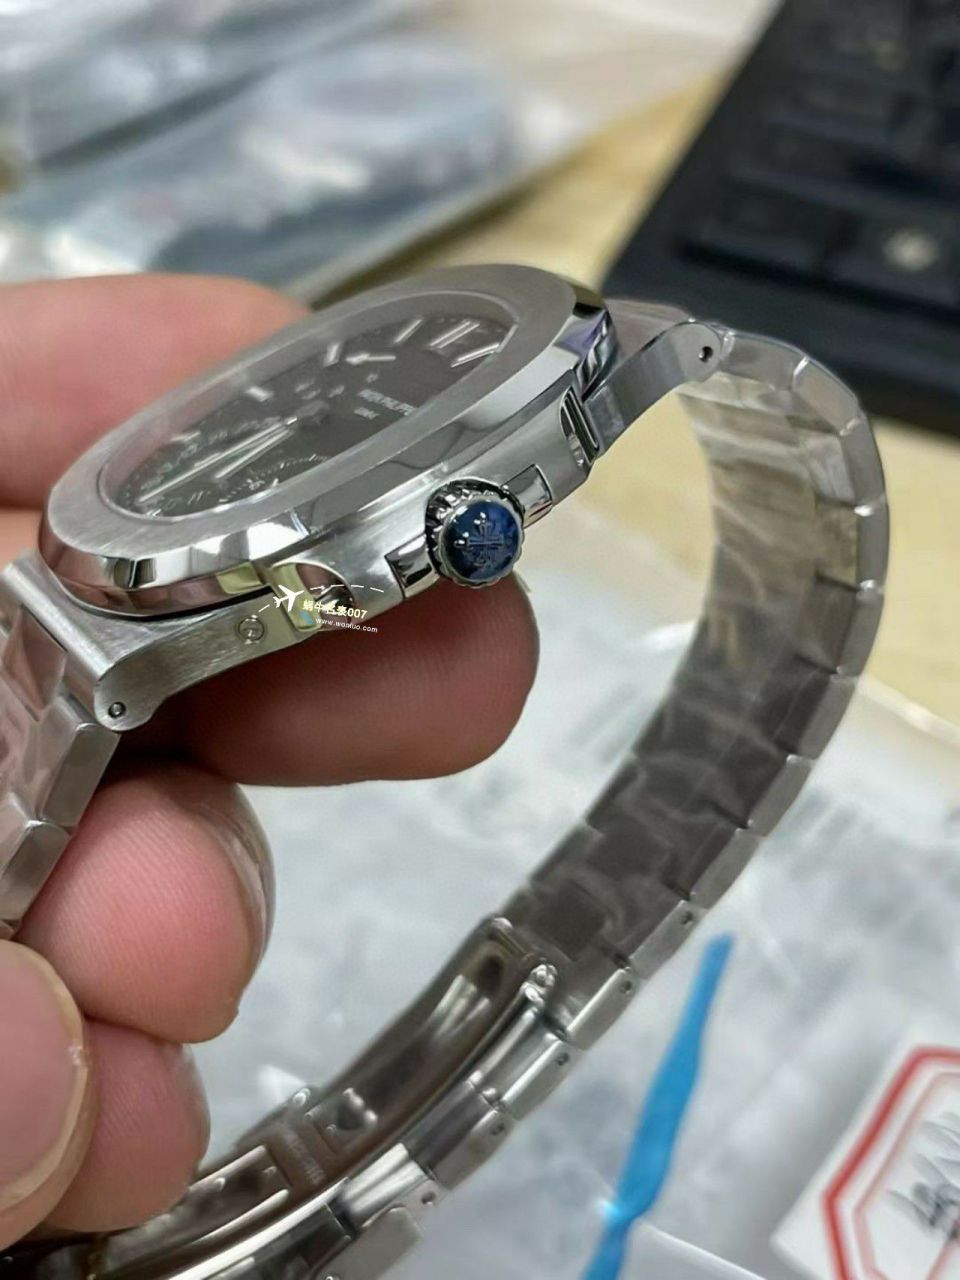 PPF厂百达翡丽鹦鹉螺一比一复刻手表5712/1A-001腕表 / BD370